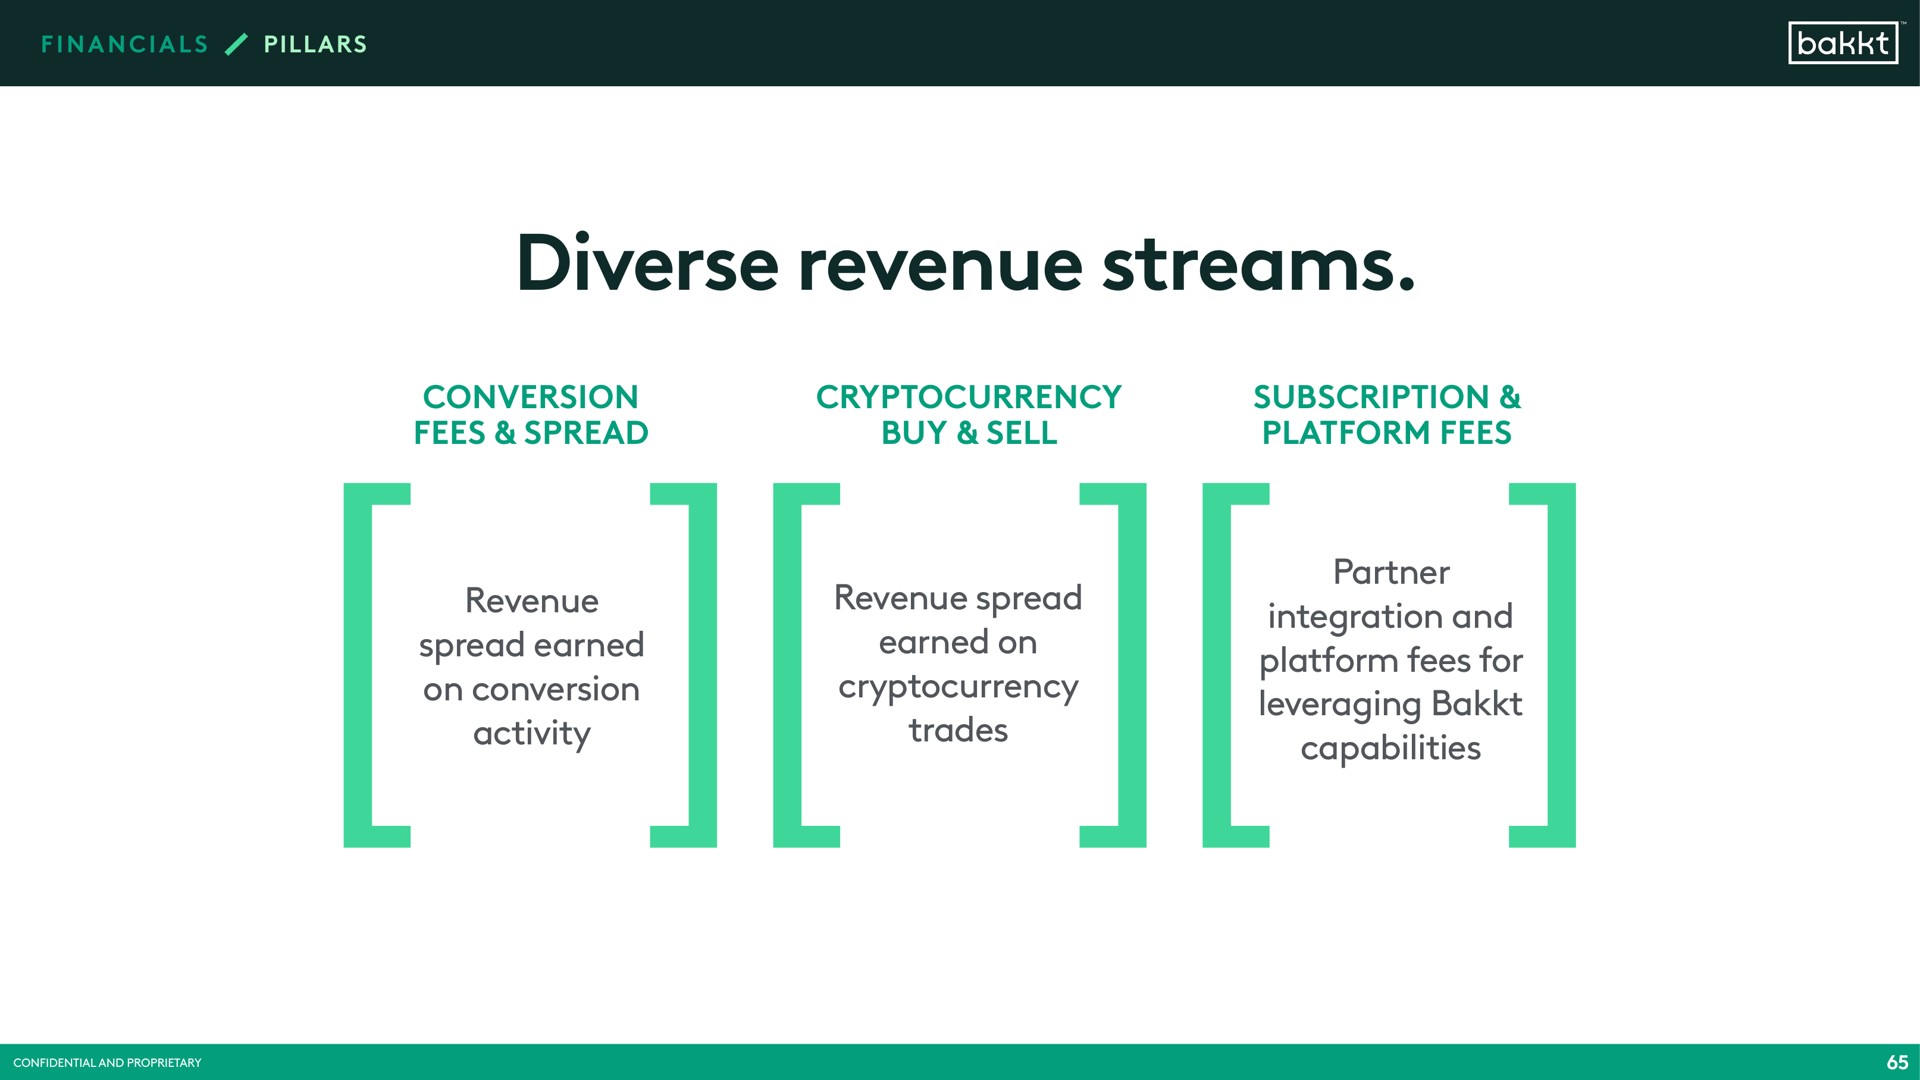 diverse revenue streams revenue spread earned on conversion activity revenue spread earned on trades partner integration and platform fees for leveraging capabilities | Bakkt